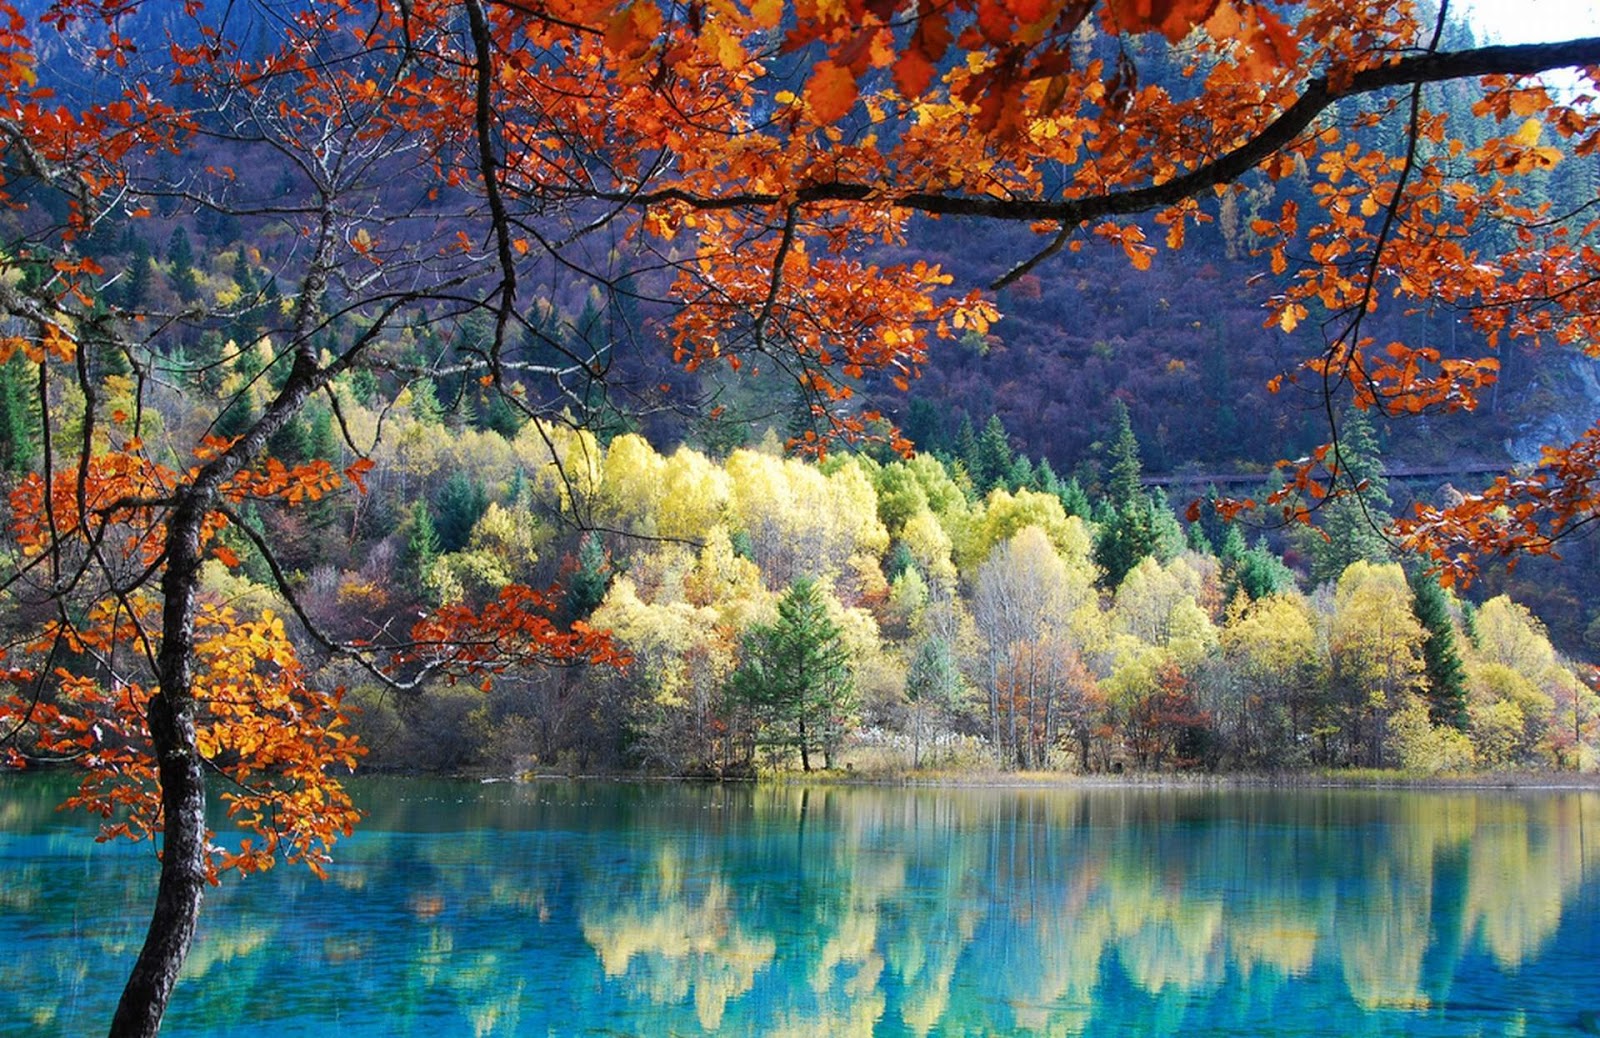 http://4.bp.blogspot.com/-91-wGgV-iww/UOhh6WnwyvI/AAAAAAAACHM/5lNvbw_lPgA/s1600/Beautiful+Nature+Reflection+Landscape+Wallpaper+HD.jpg